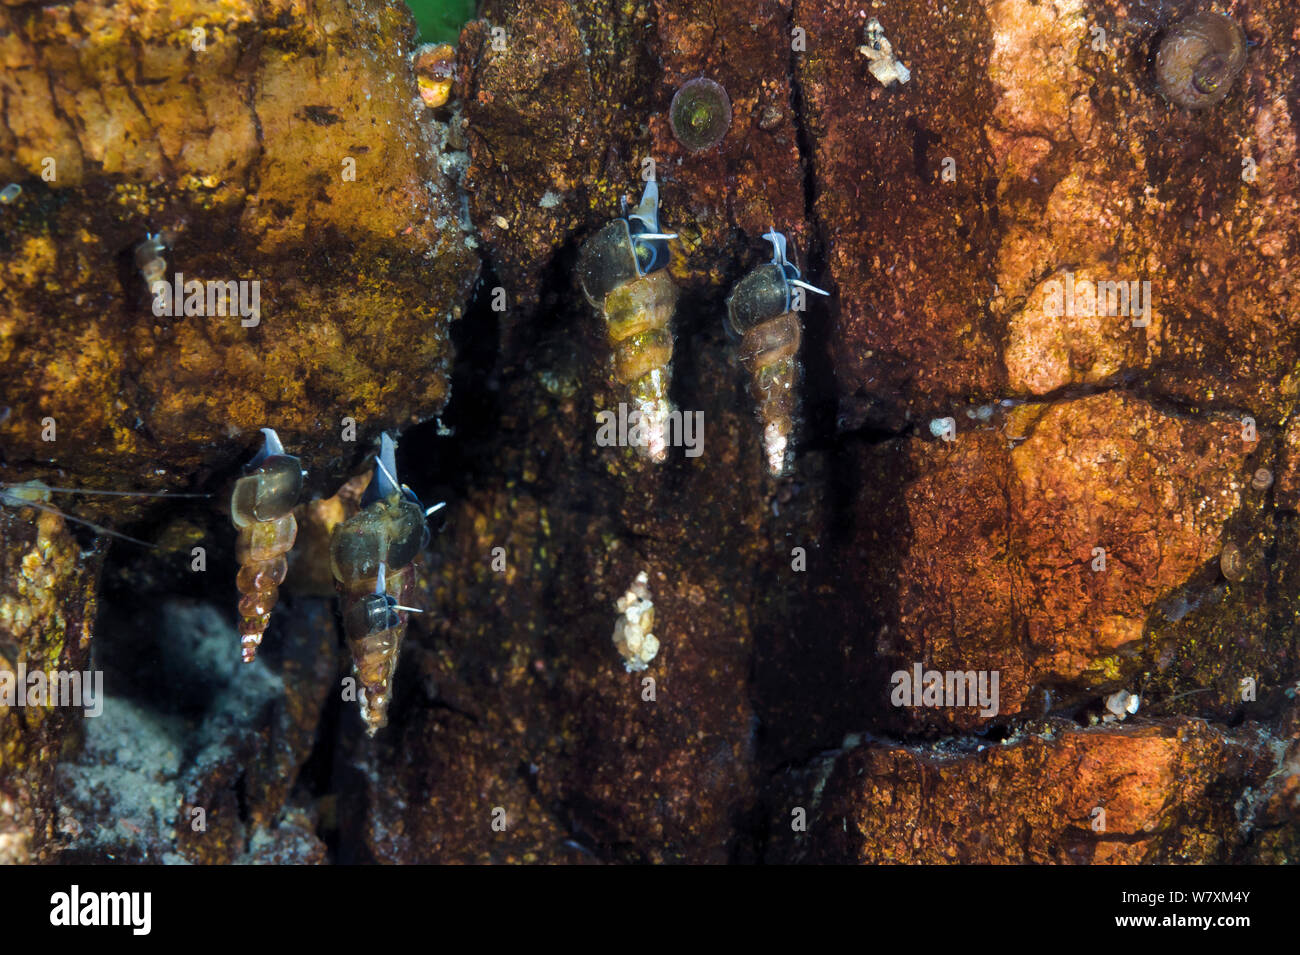 Snails (Baicalia turriformis, Acroloxidae sp and Choanomphalus sp) Lake Baikal, Russia, May. Stock Photo